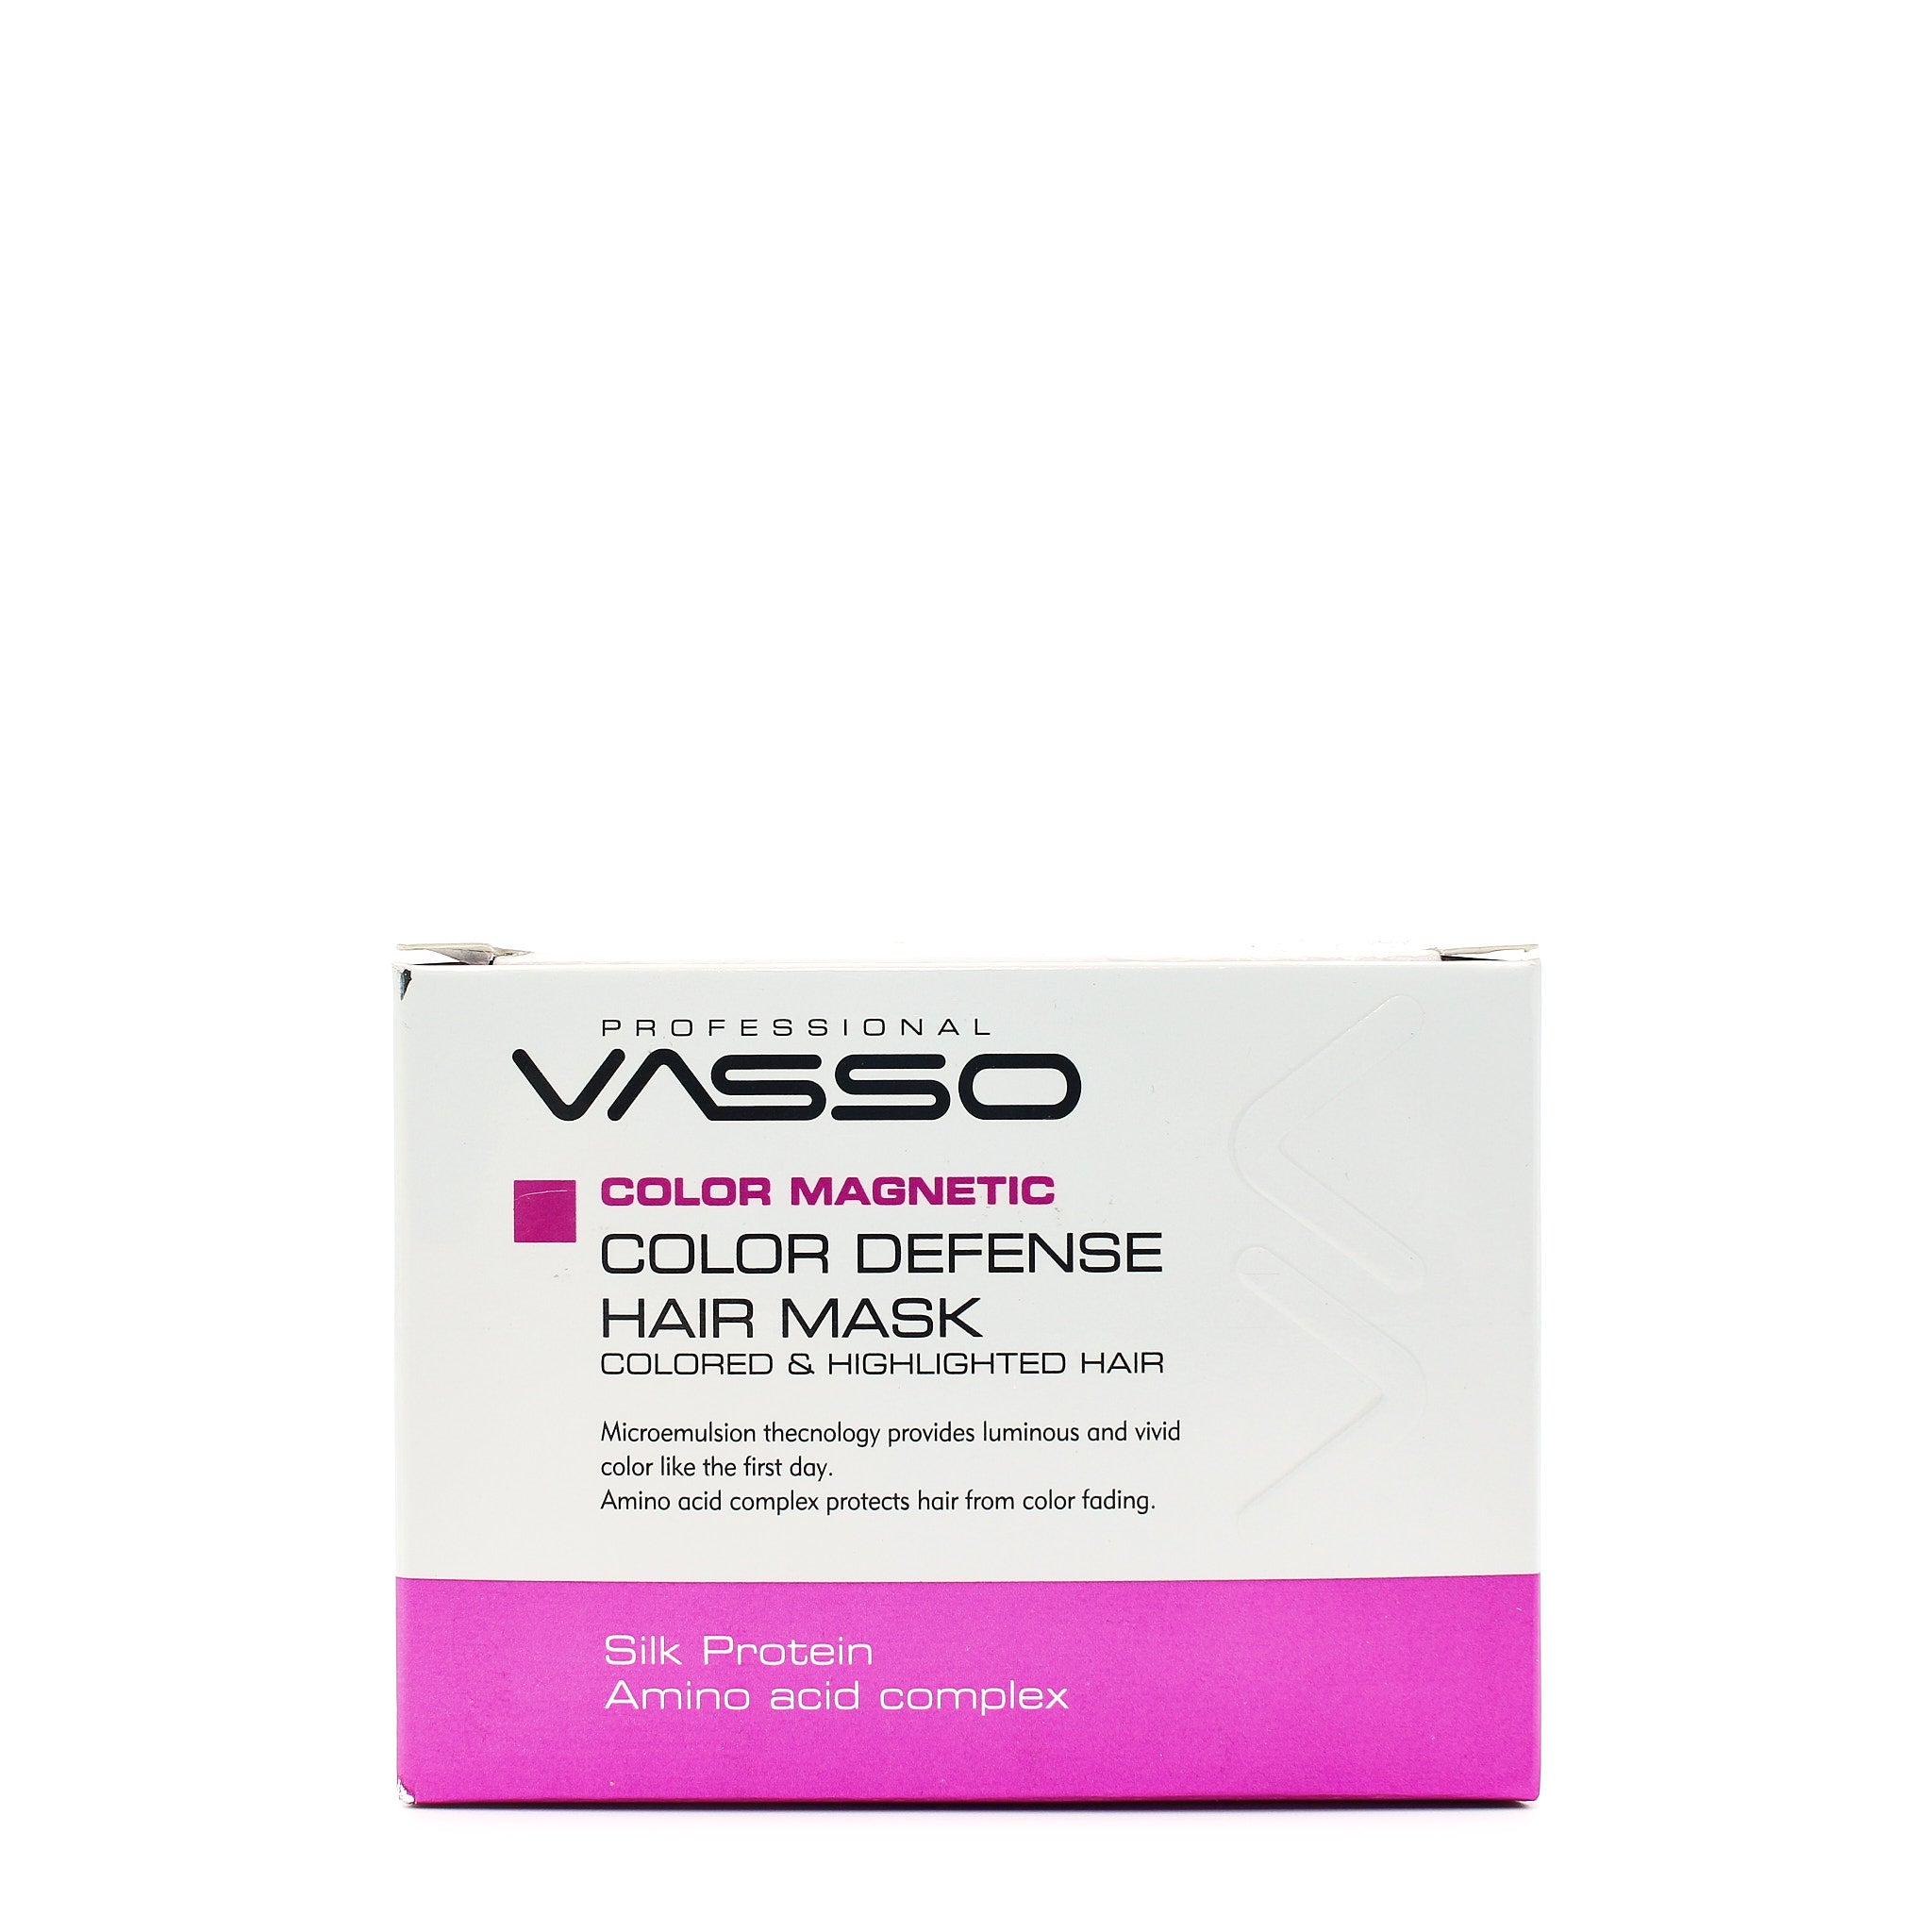 VASSO Color Magnetic Color Defense Hair Mask 5.7 oz